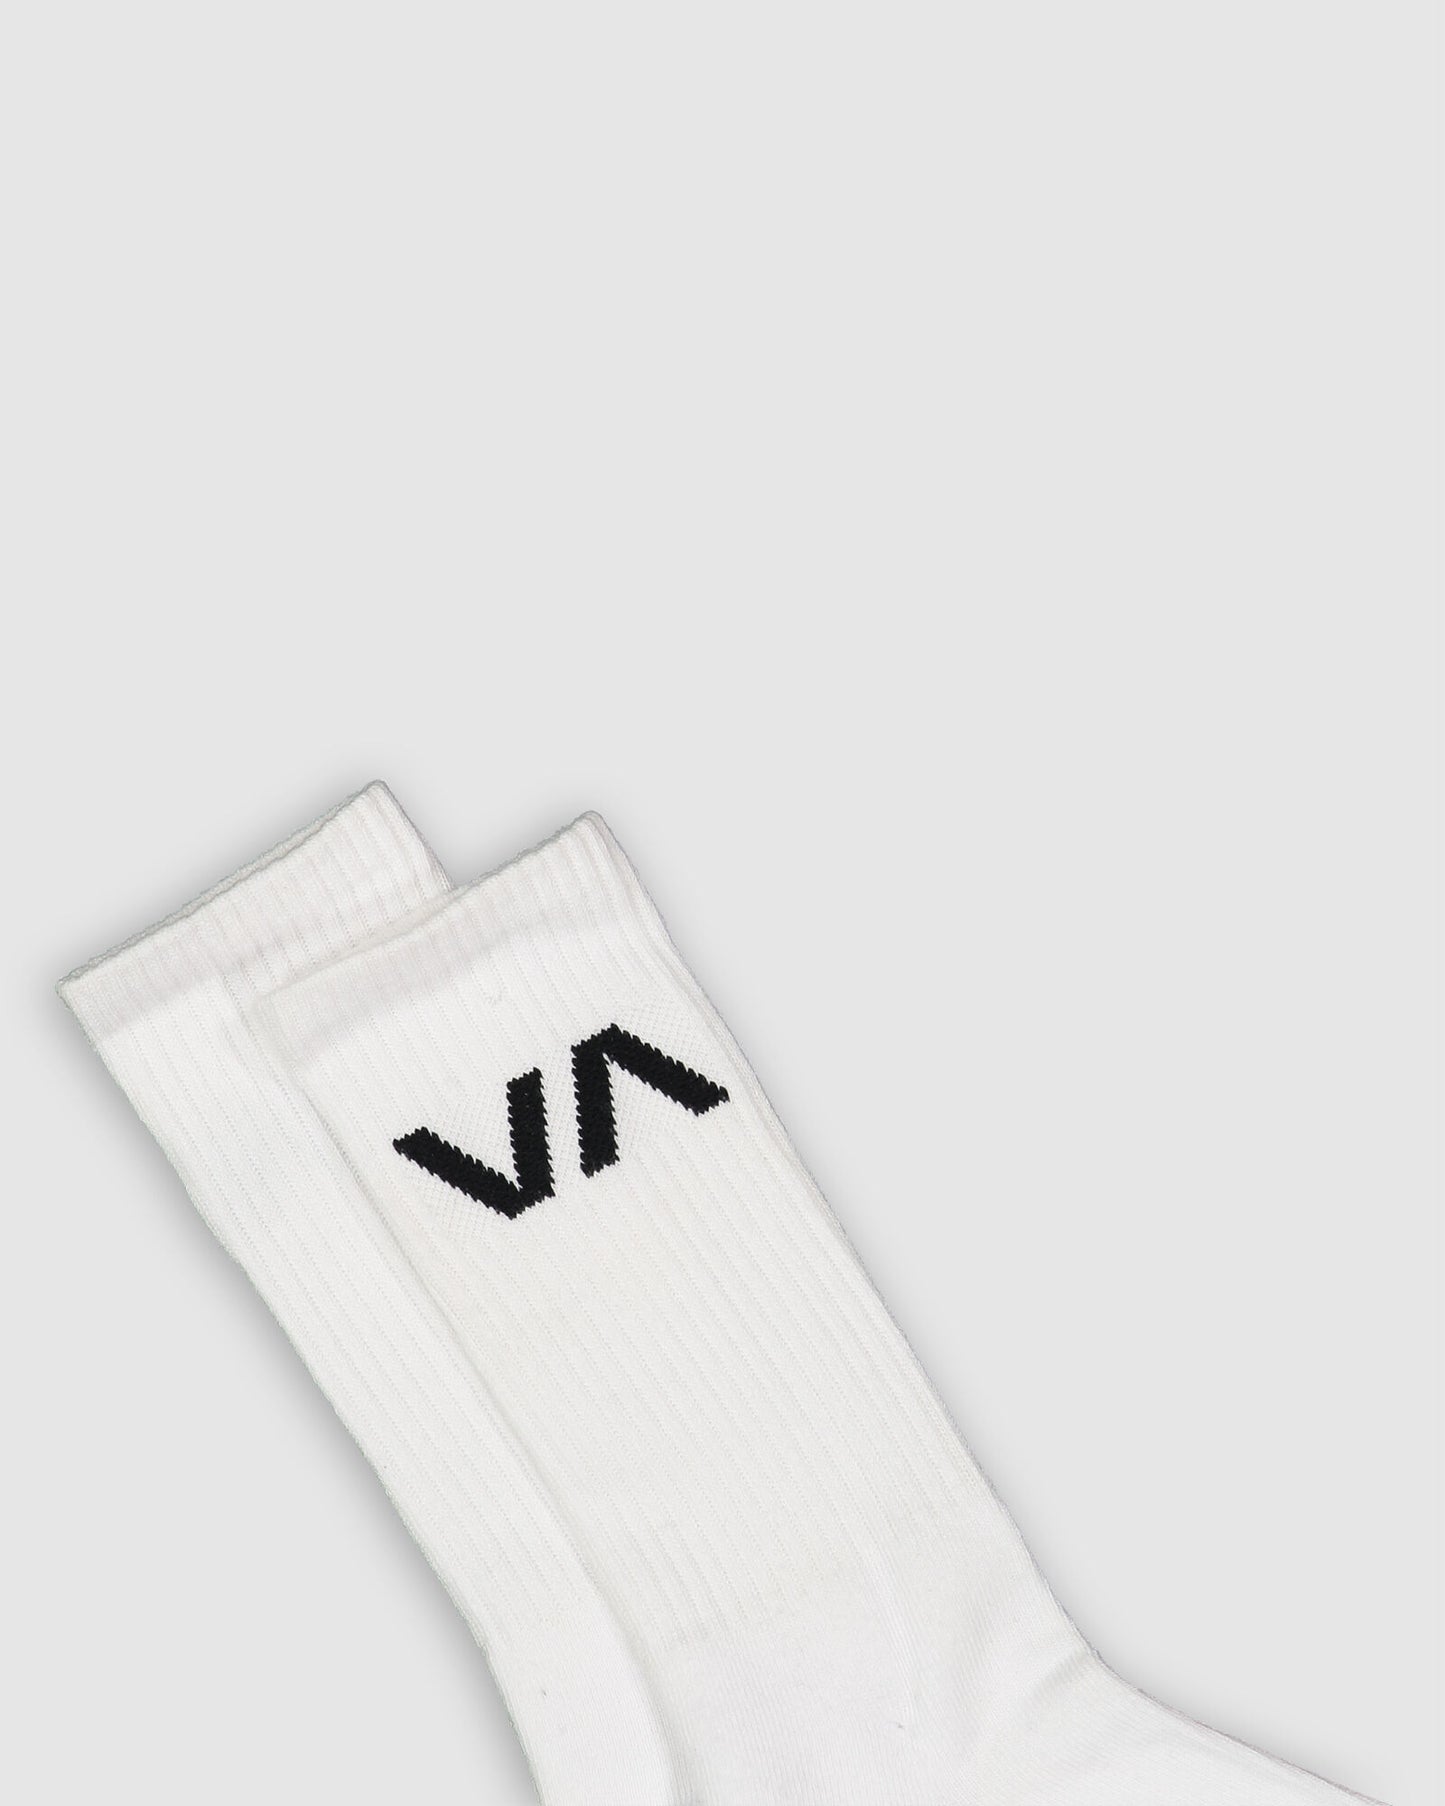 RVCA 5 Pack Sport Socks White